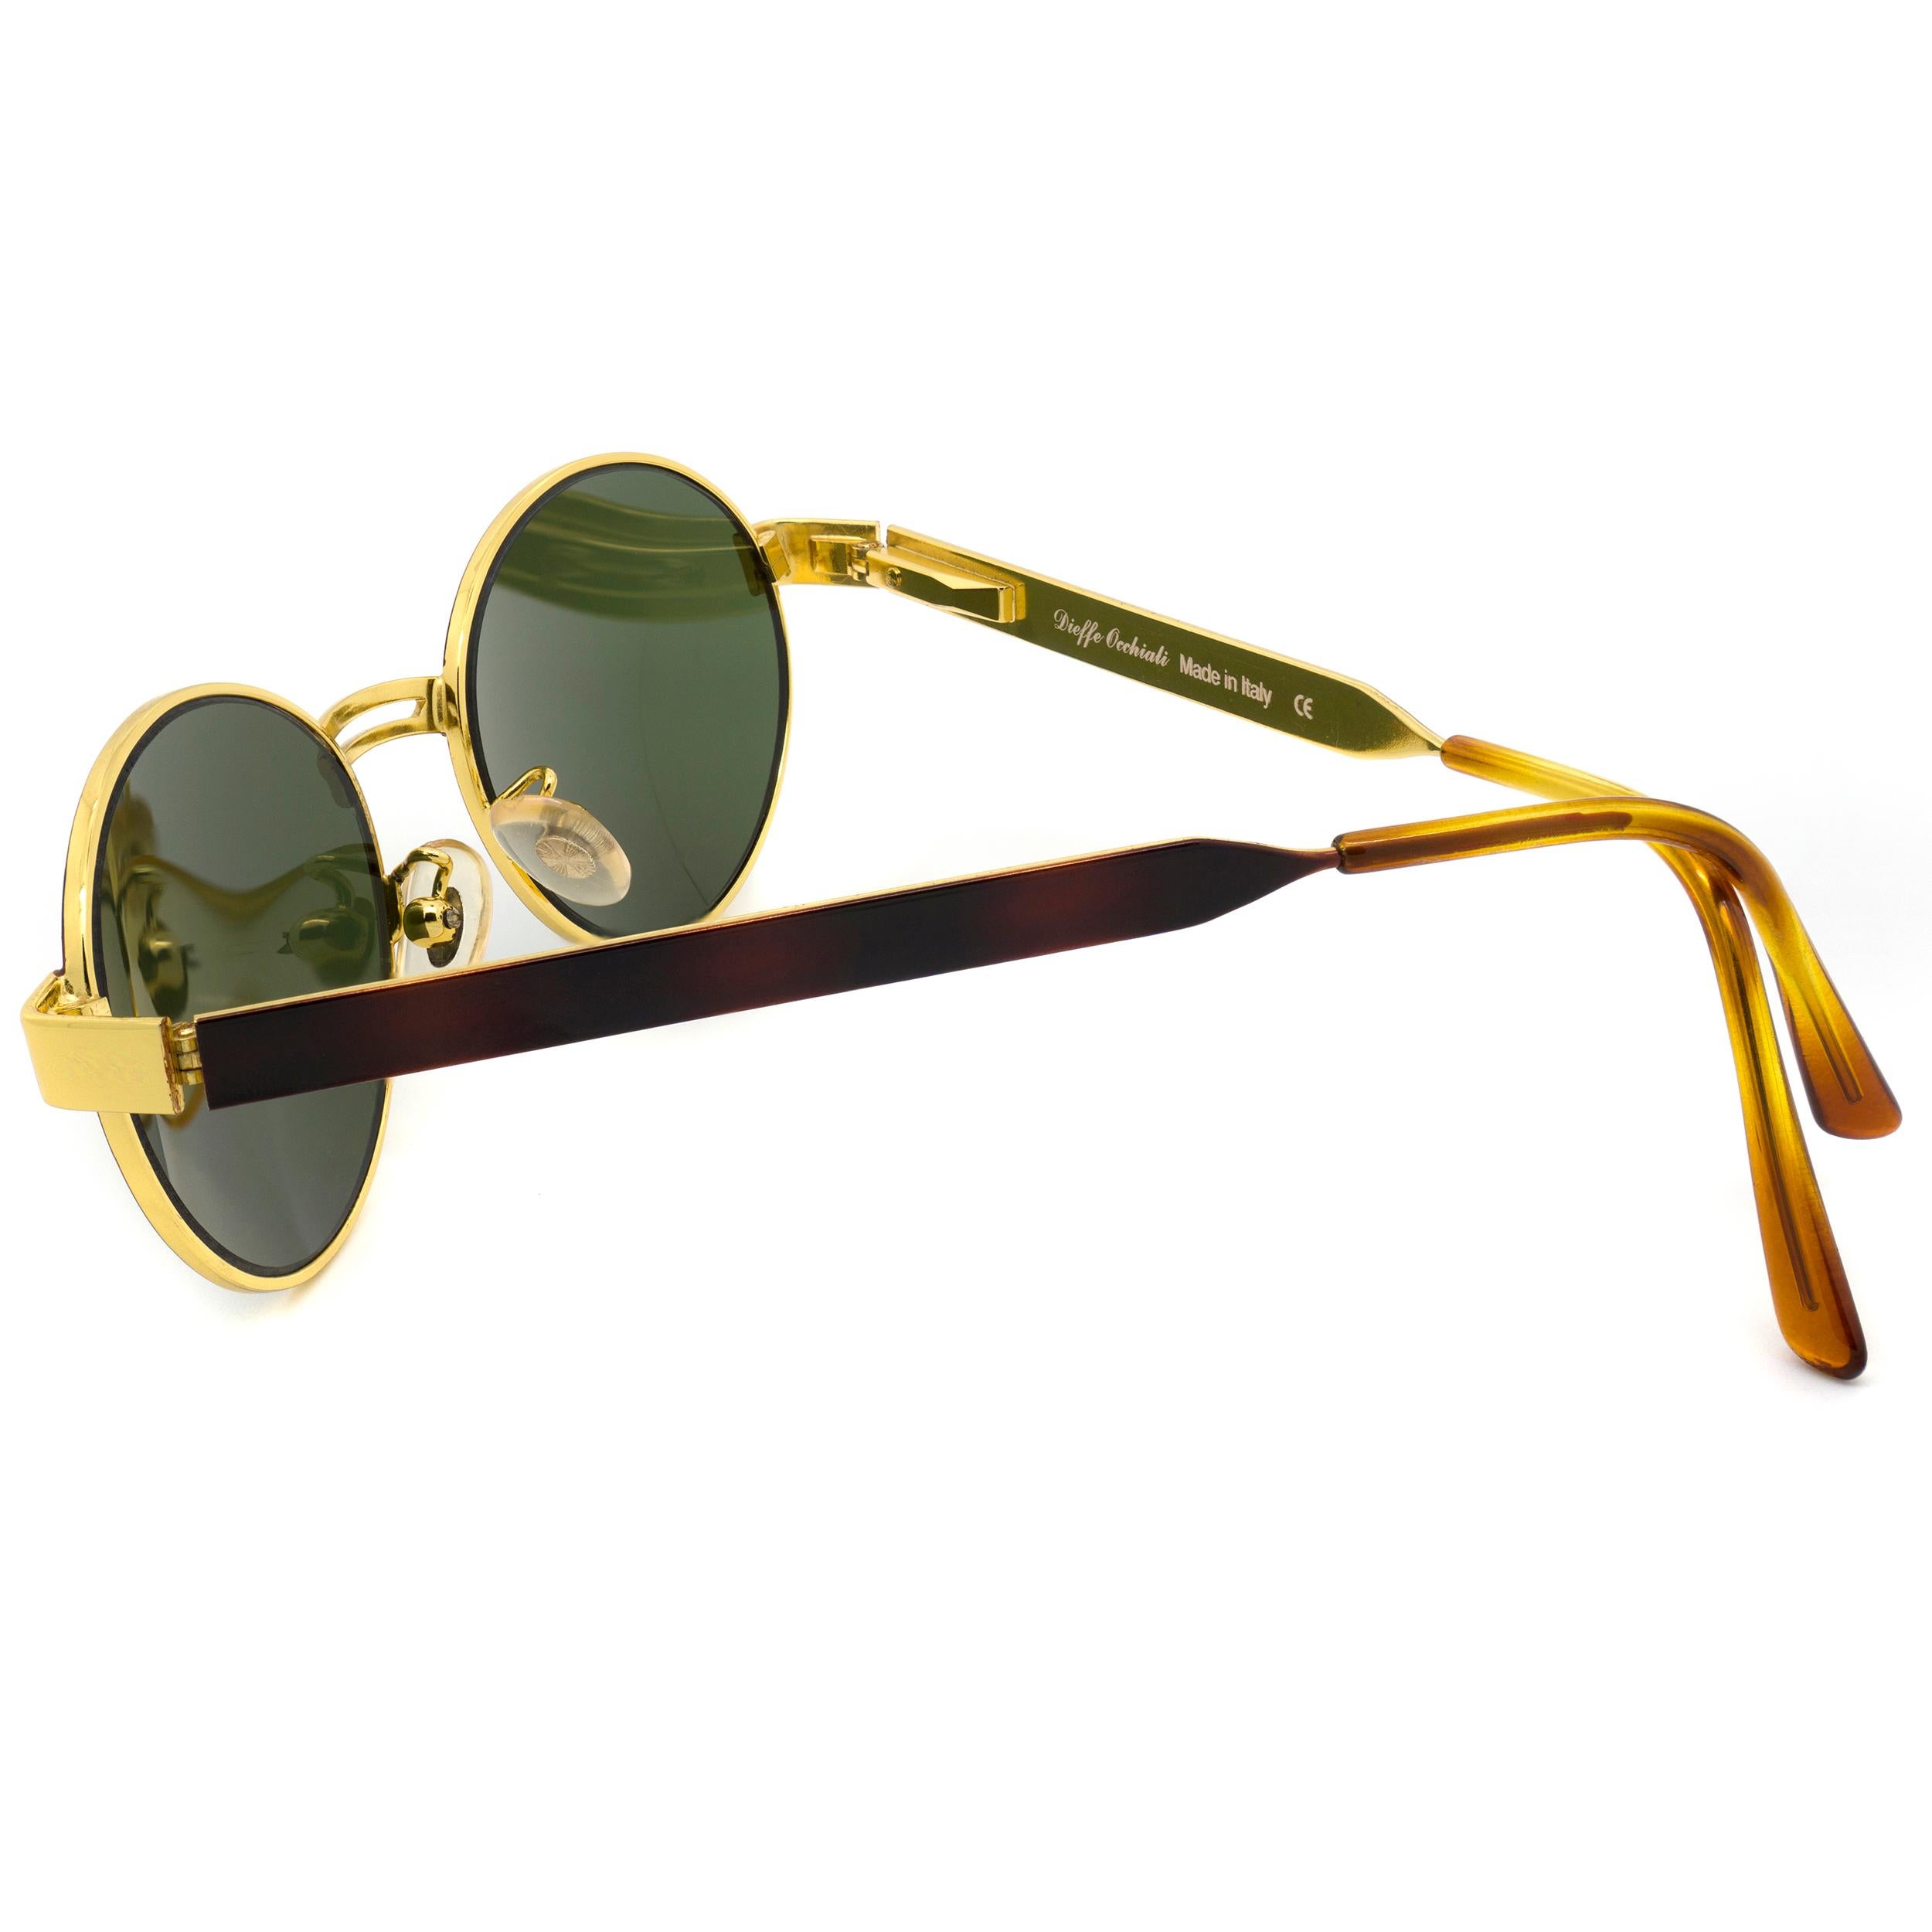 Black Top Gun vintage sunglasses For Sale